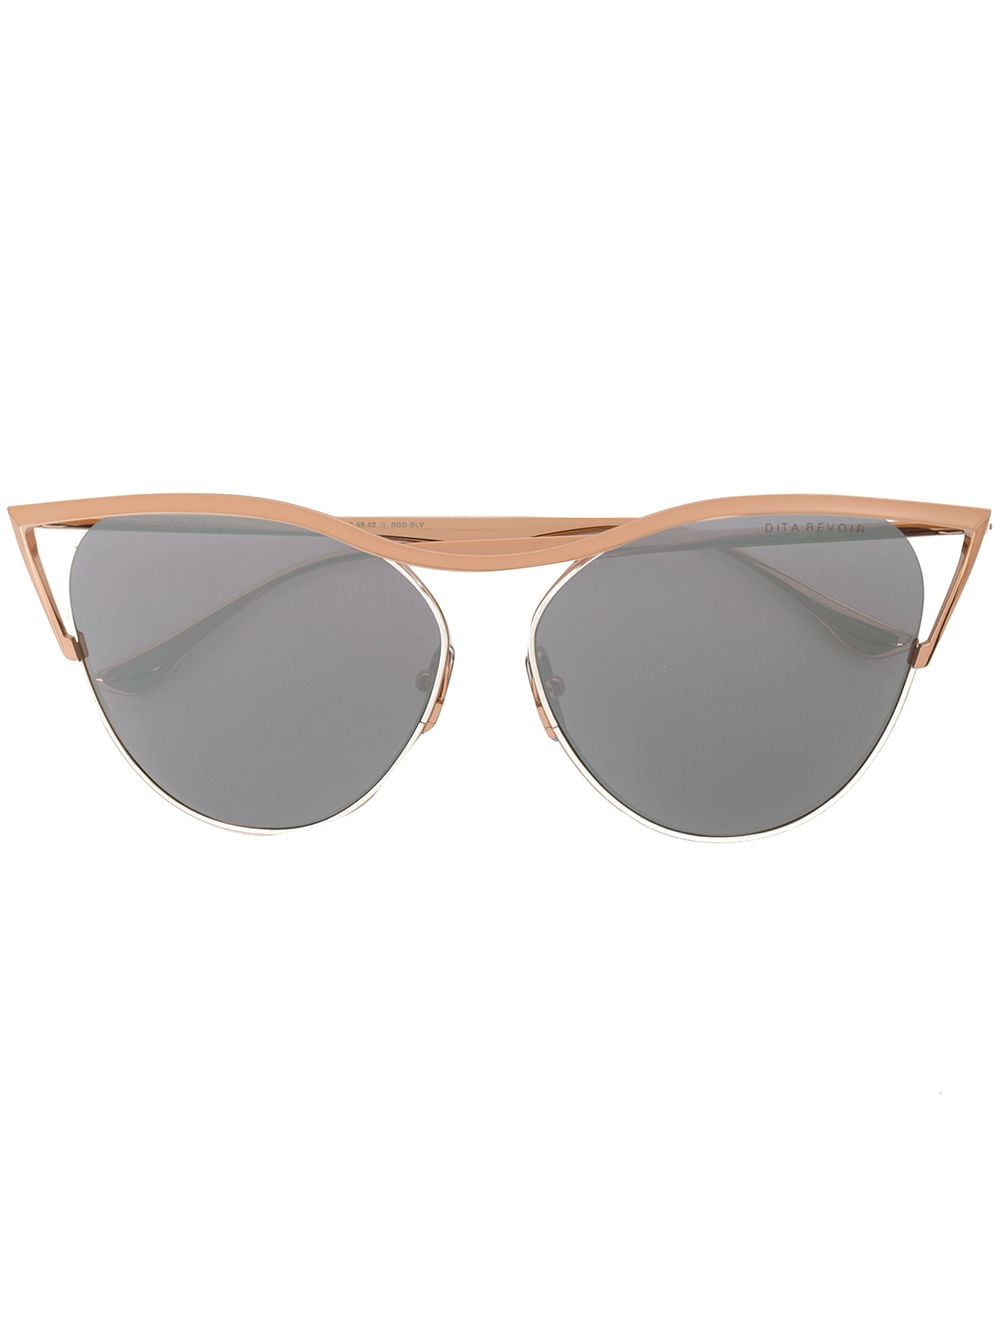 Image 1 of Dita Eyewear Revoir sunglasses